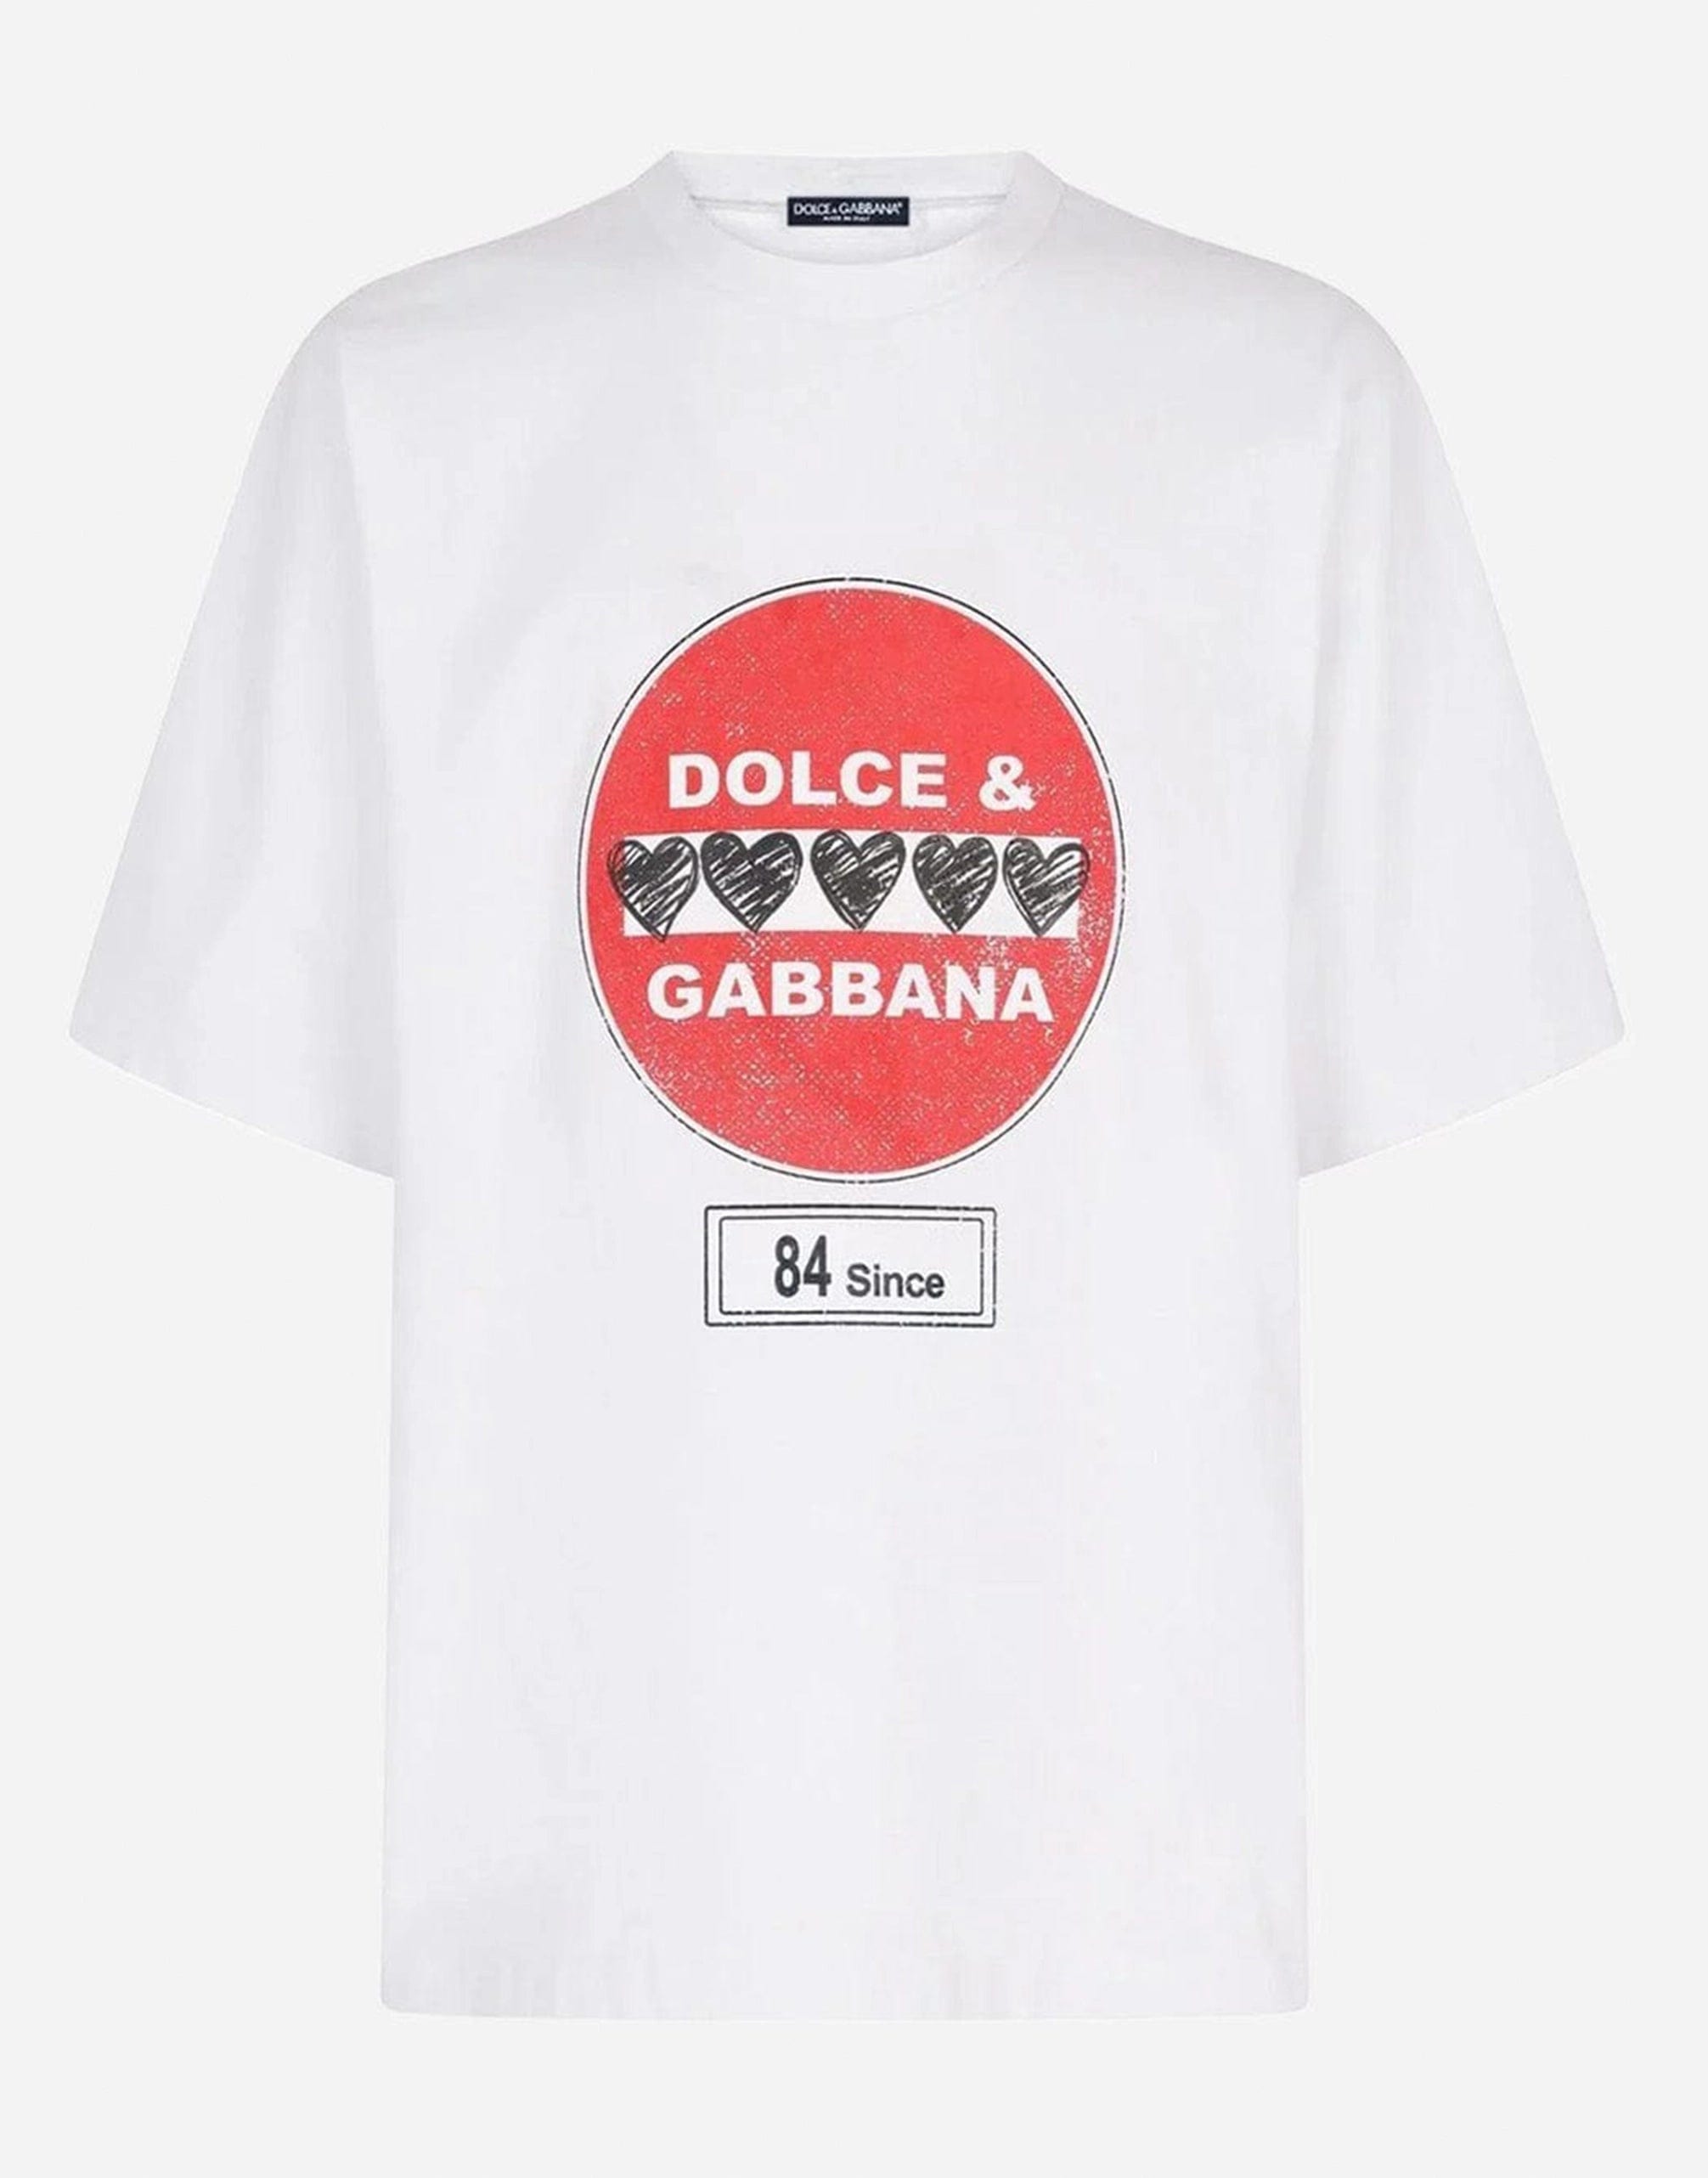 Dolce & Gabbana Road-sign Print T-Shirt